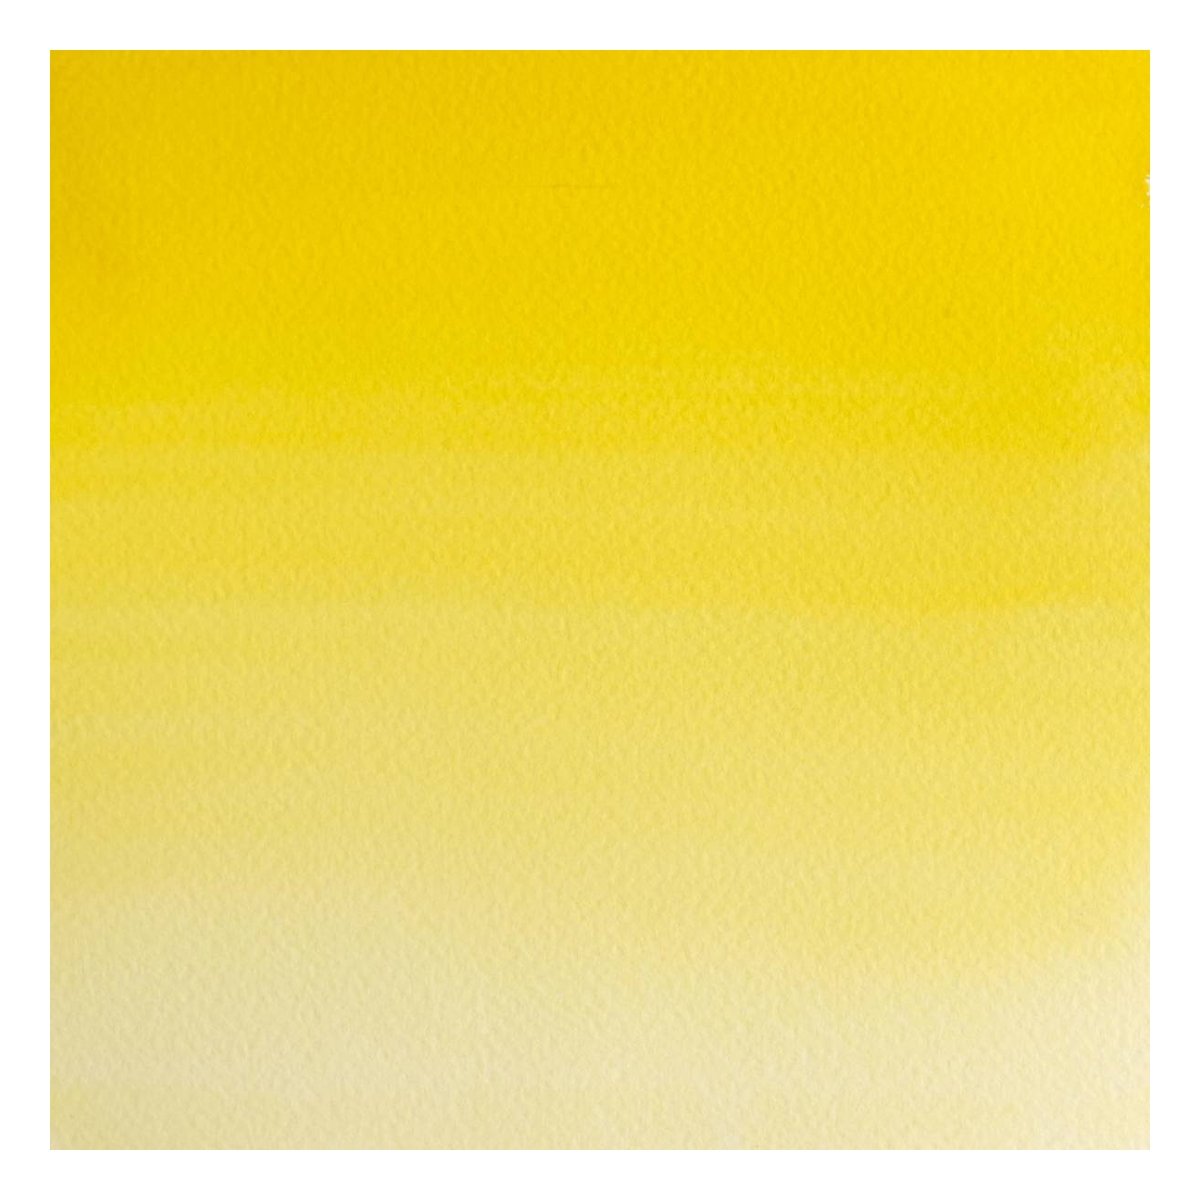 Winsor & Newton Winsor Yellow Professional Watercolour Tube 5ml